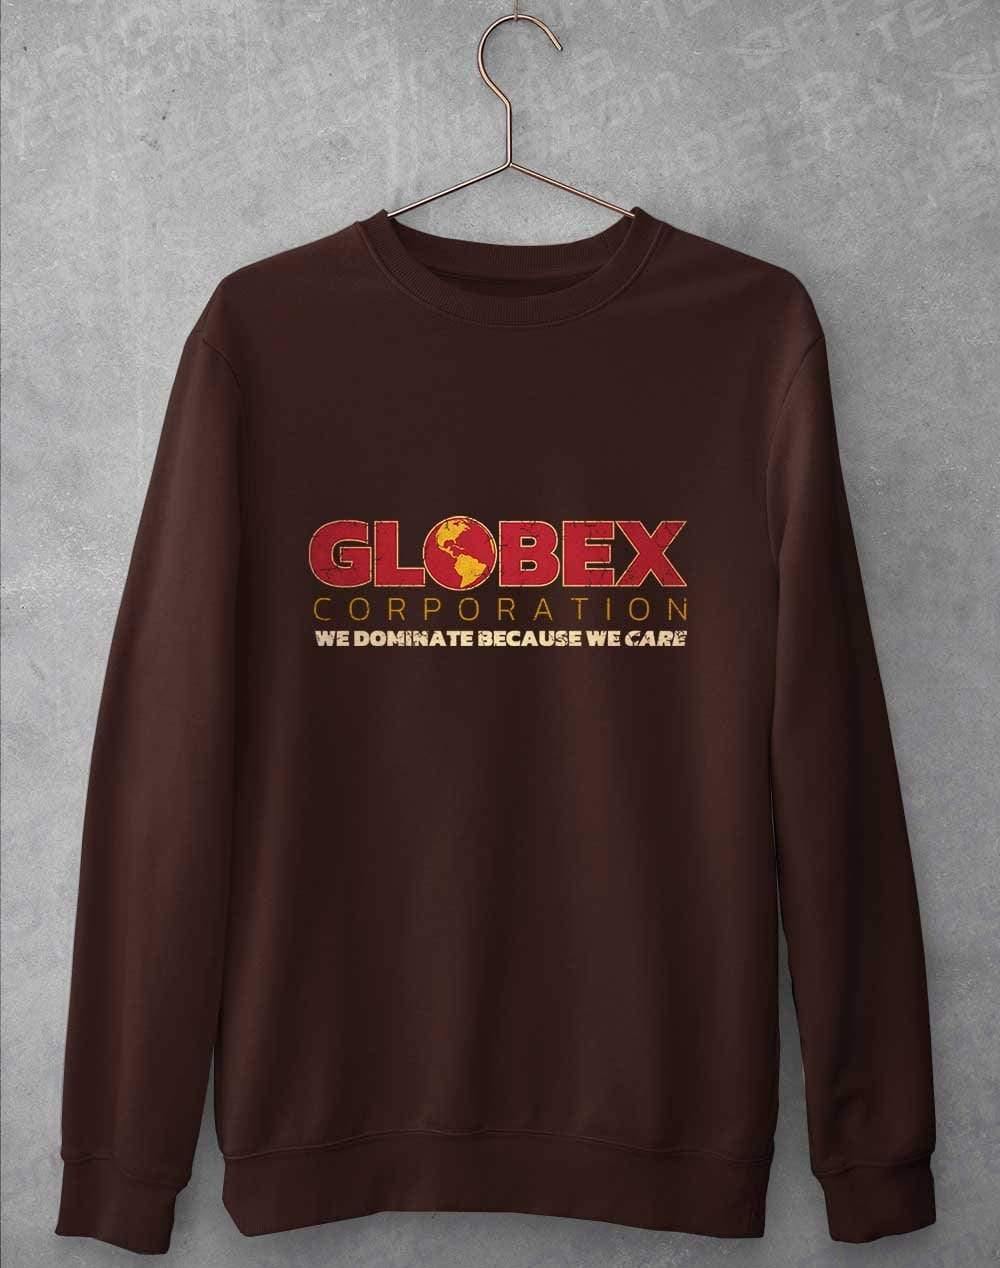 Globex Corporation Sweatshirt S / Hot Chocolate  - Off World Tees